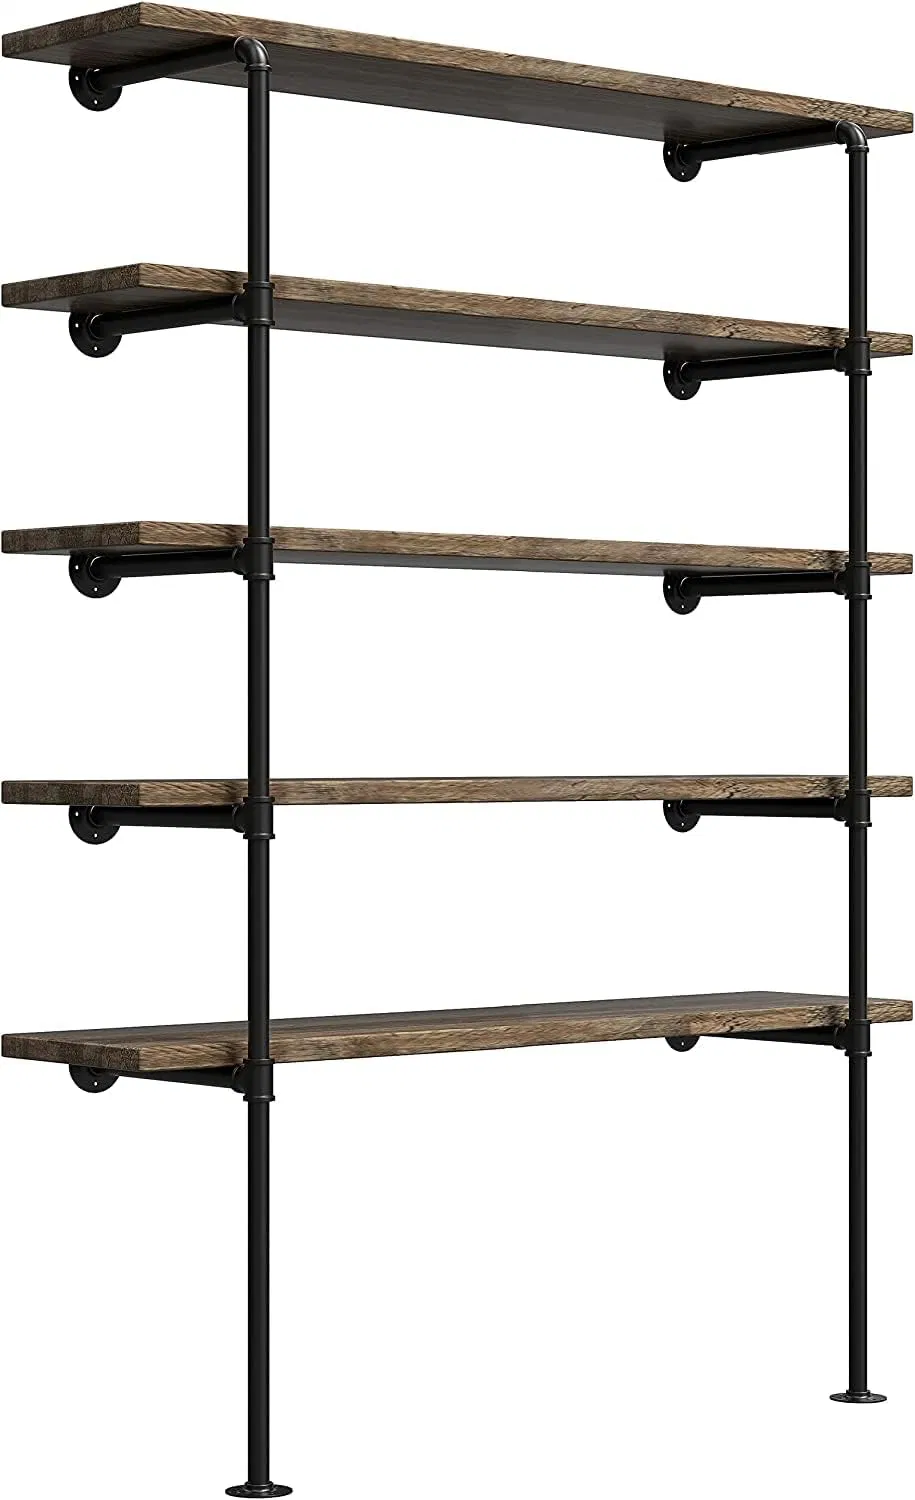 The Sell Like Hot Cakes Industrial Wall Mount Iron Pipe Shelf Shelves Shelving Bracket Vintage Retro Black Wooden Pipe Shelf